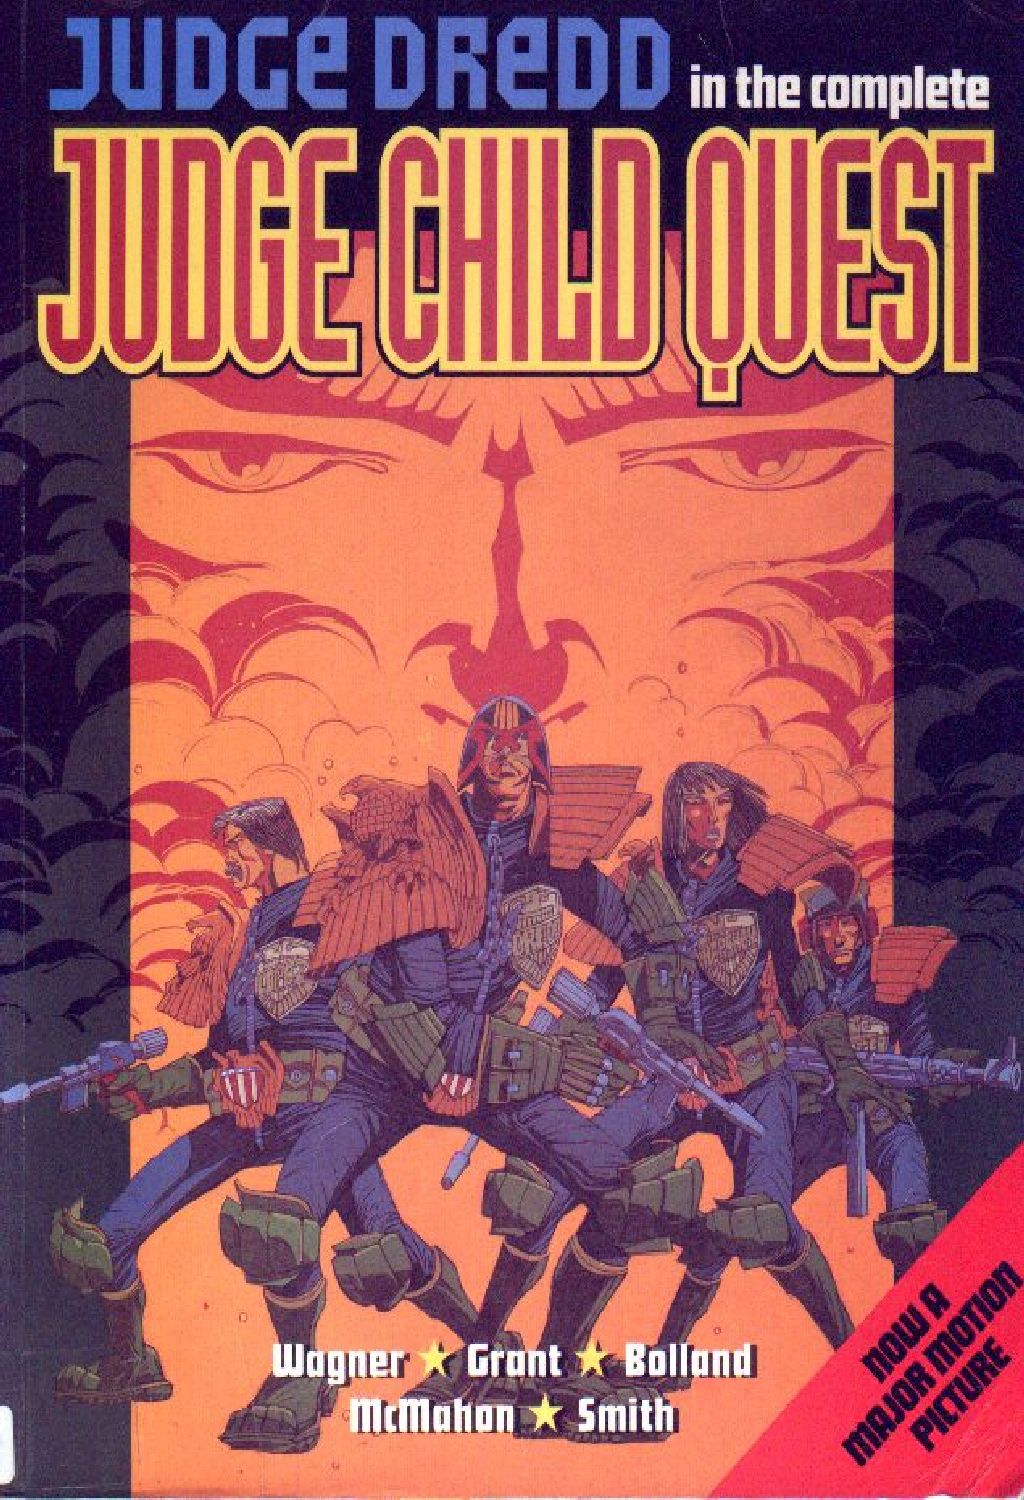 Read online Judge Dredd Epics comic -  Issue # TPB The Judge Child Quest - 1